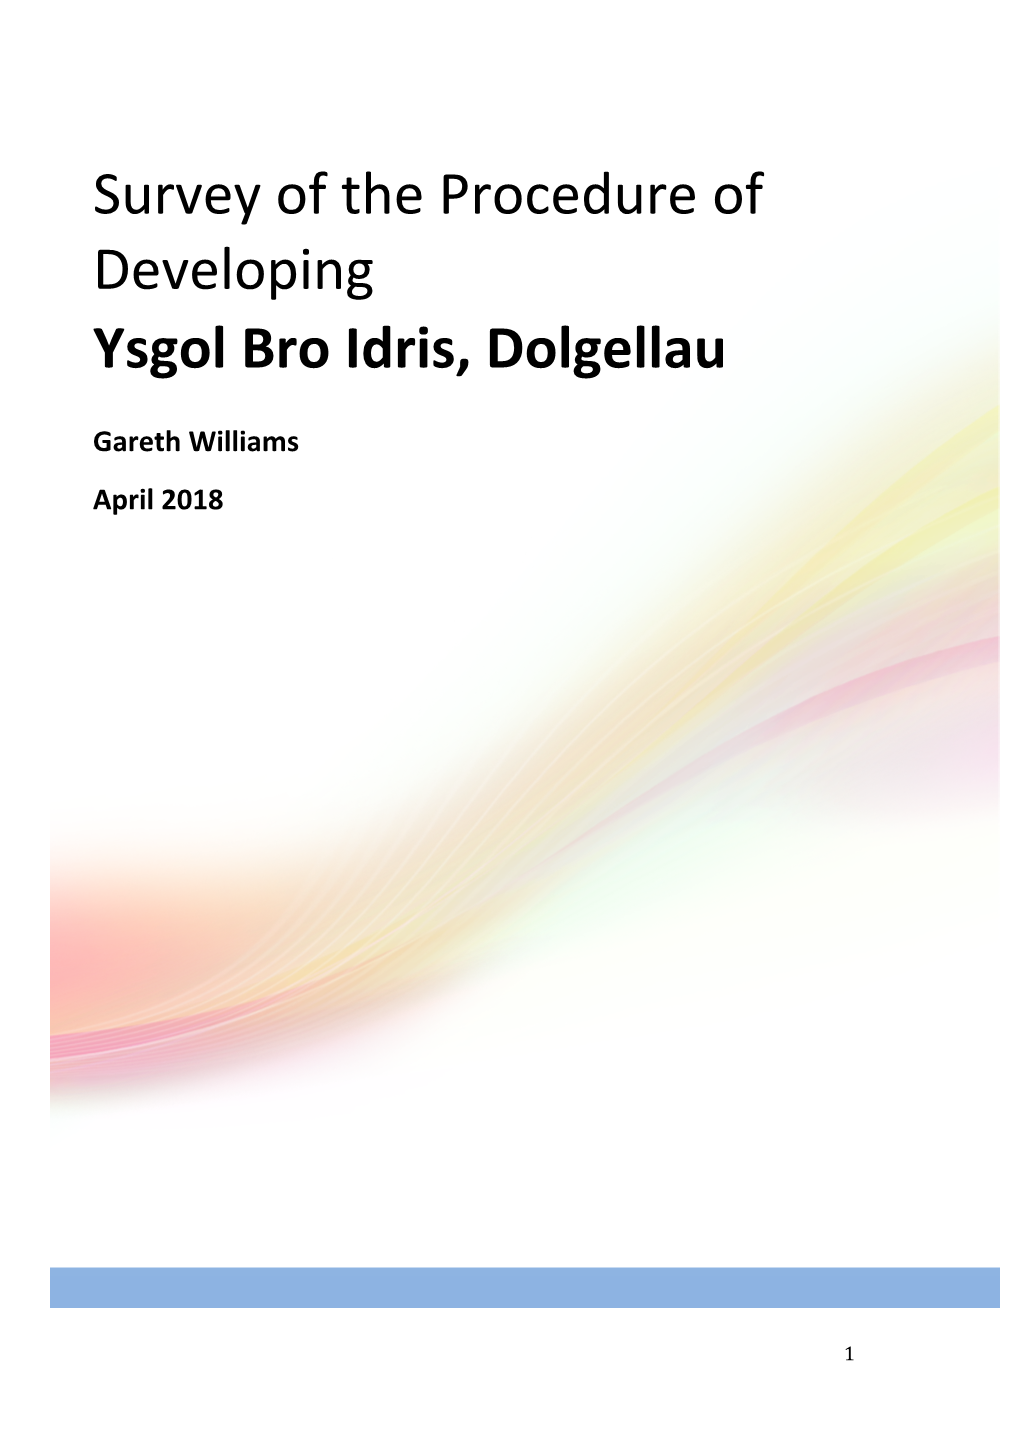 Survey of the Procedure of Developing Ysgol Bro Idris, Dolgellau